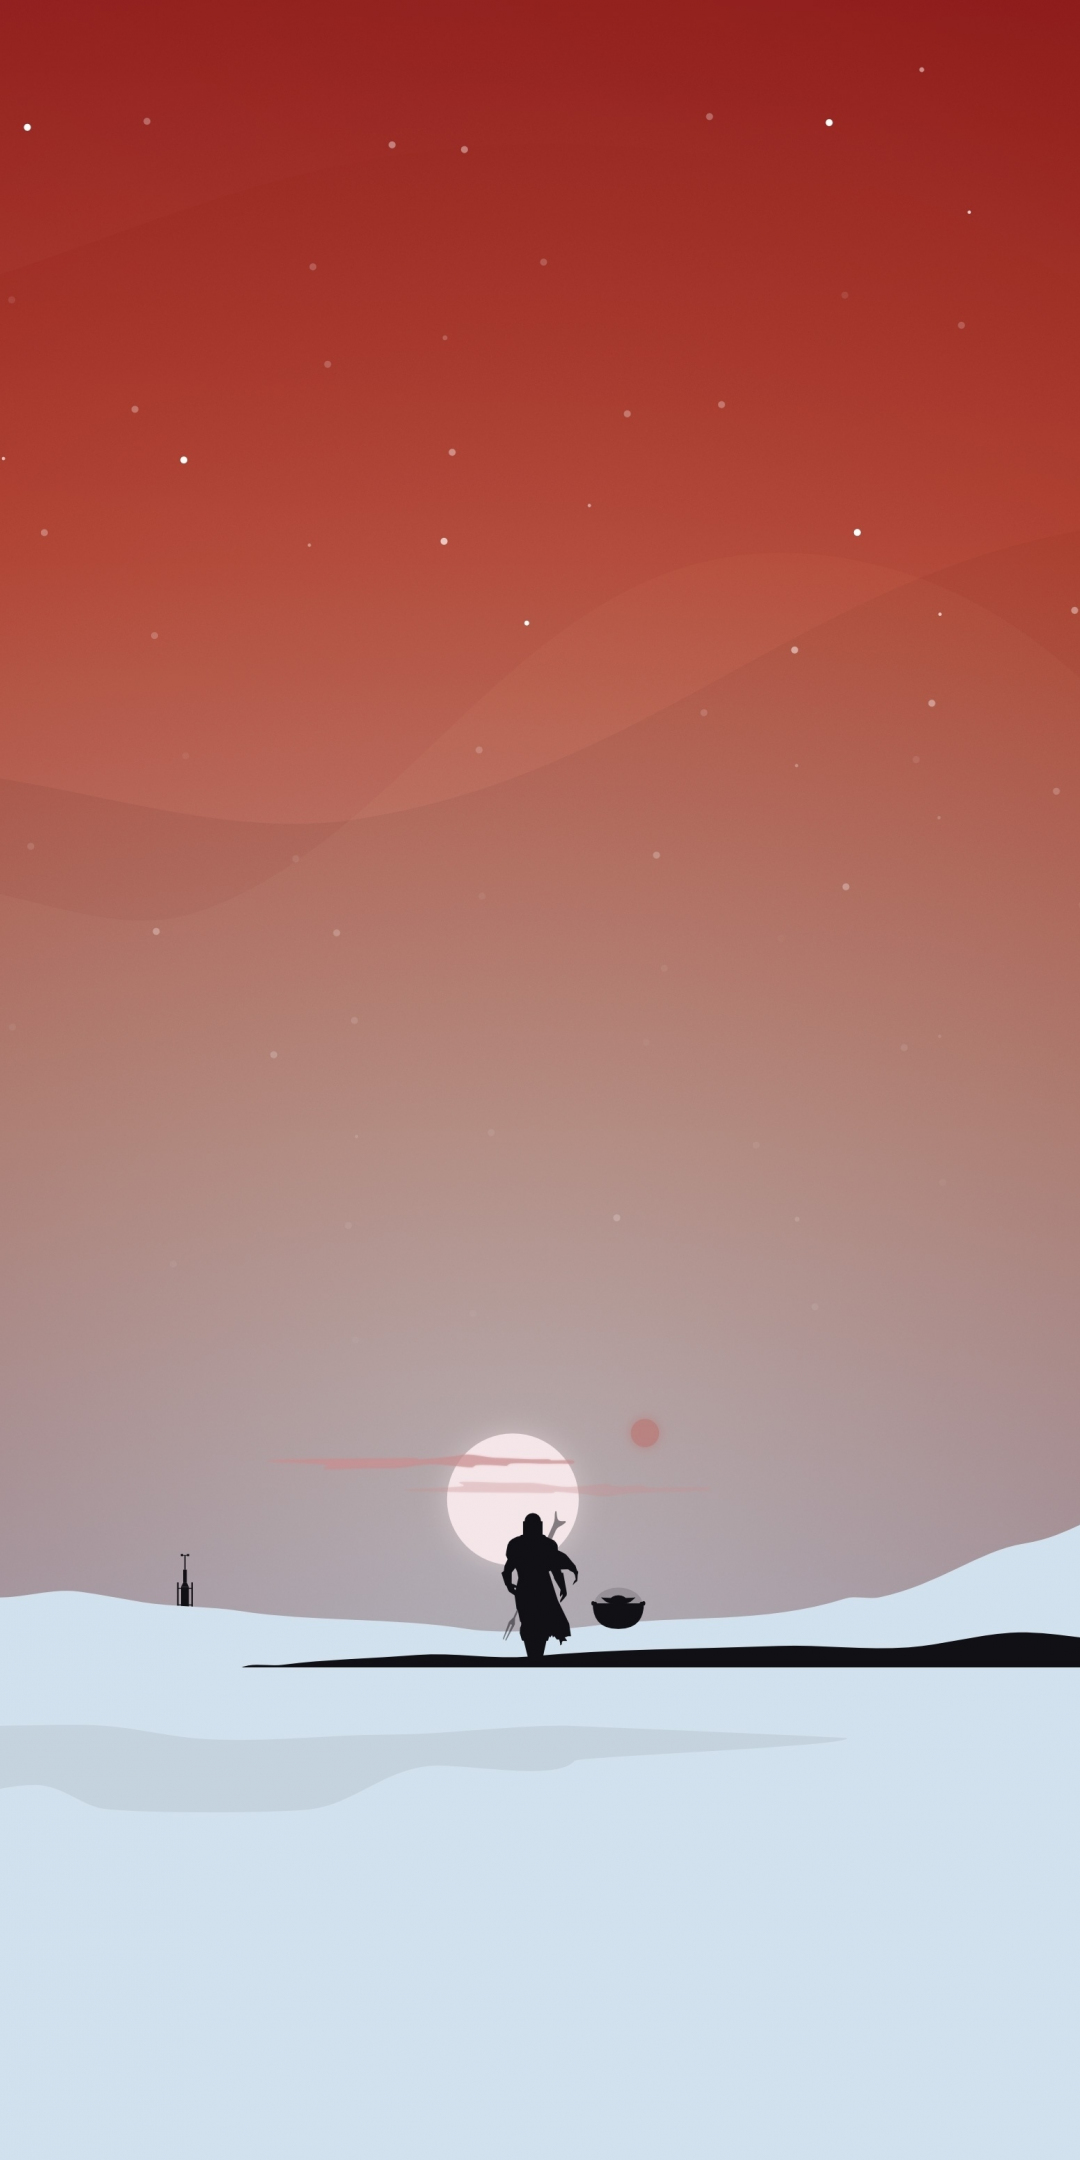 Minimal, Star Wars, The Mandalorian, Silhouette, sunset, landscape, 2020, 1080x2160 wallpaper